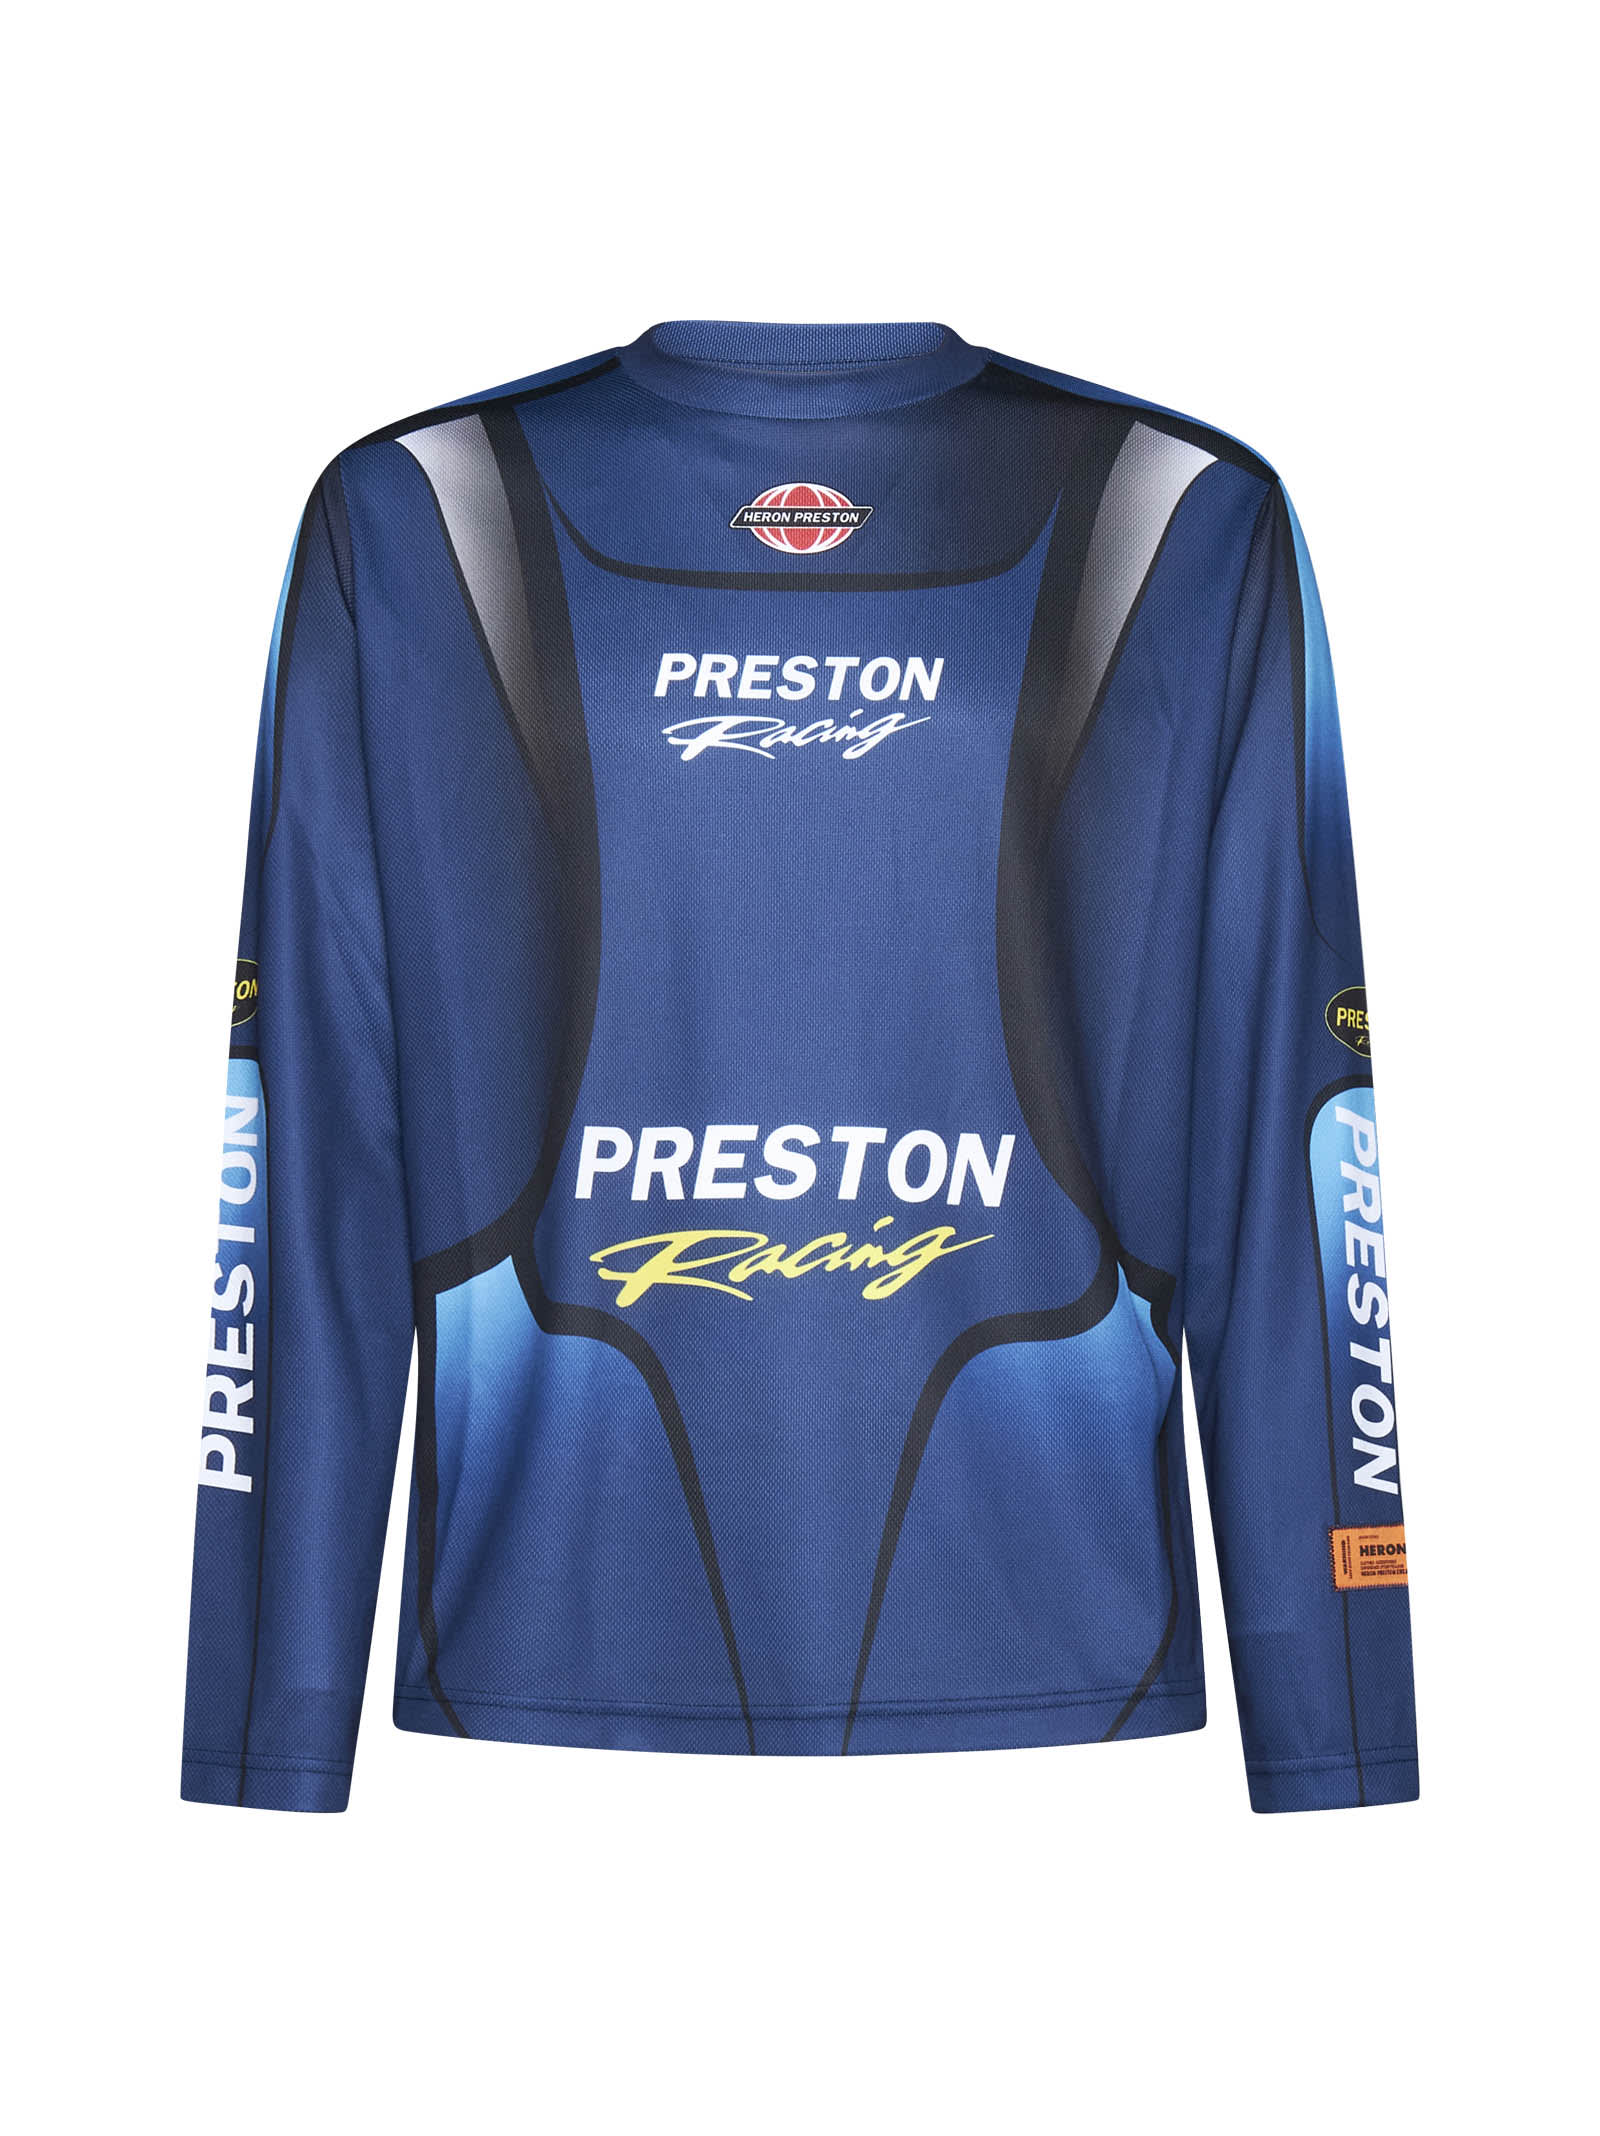 Heron Preston T-shirt In Navy Light Blue